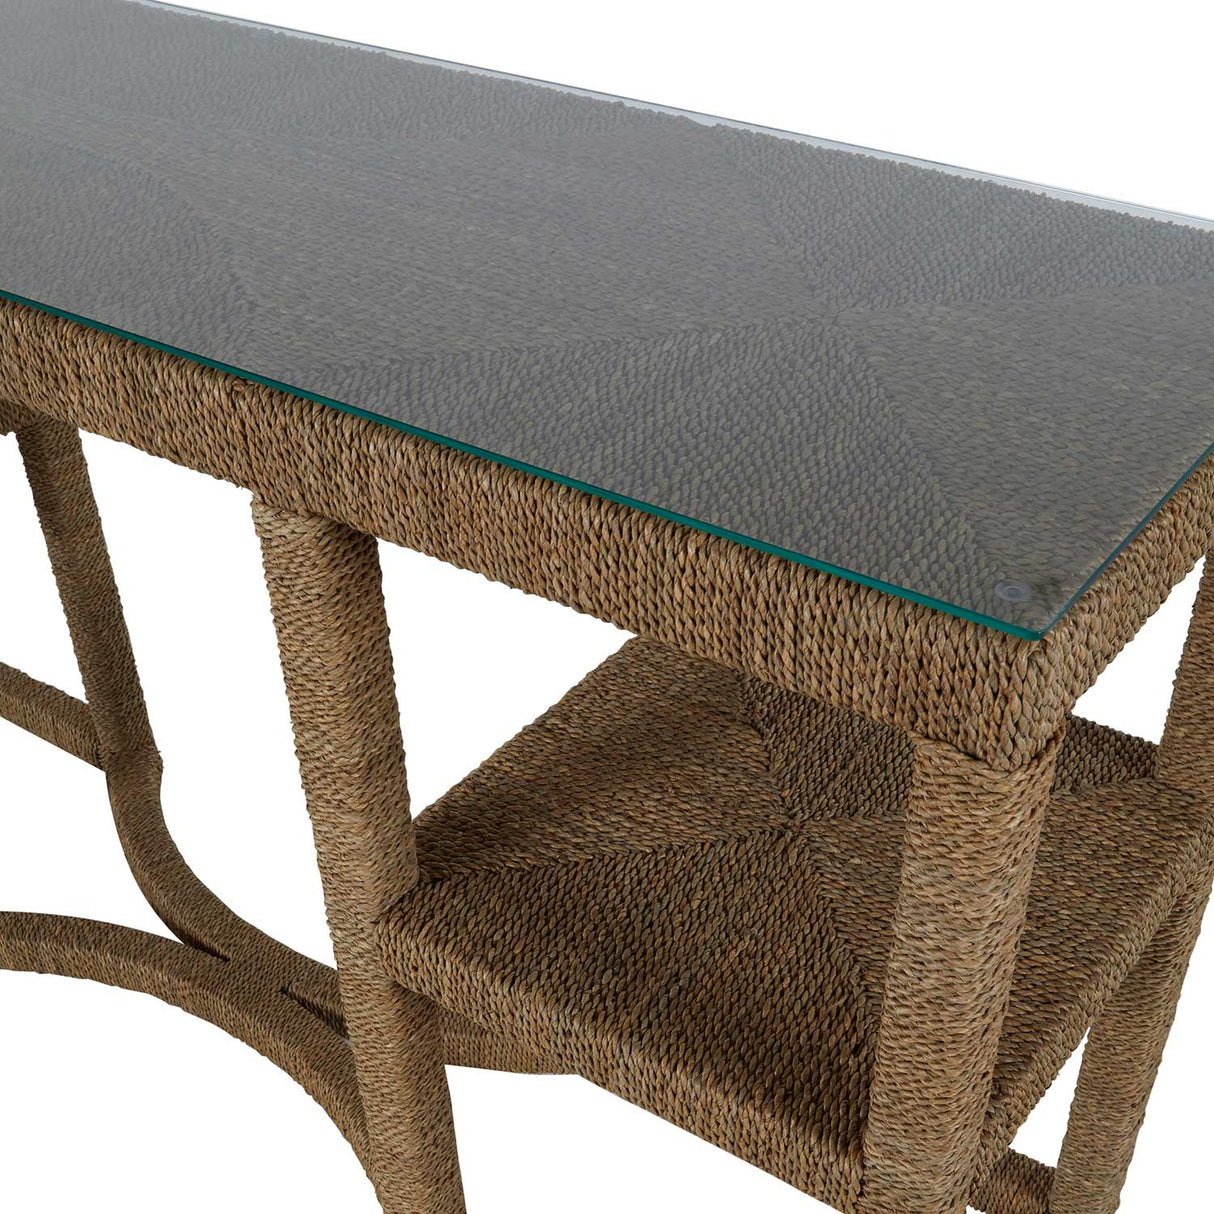 Gabby Dandridge Console Table Furniture gabby-SCH-166135